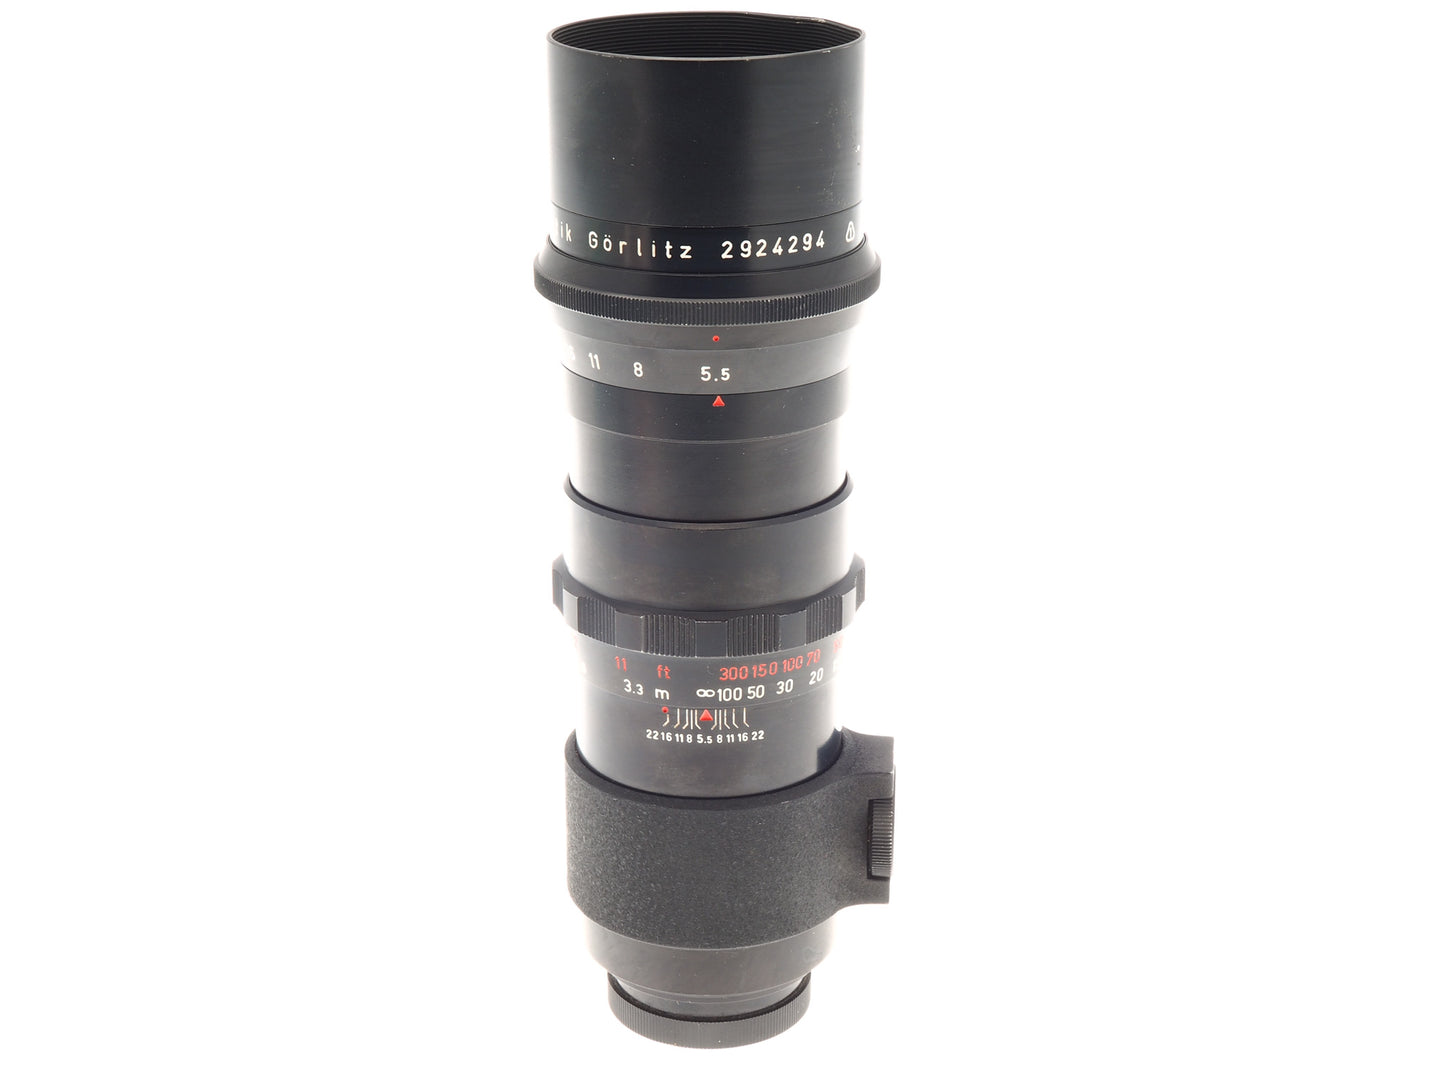 Meyer-Optik Görlitz 250mm f5.5 Telemegor - Lens